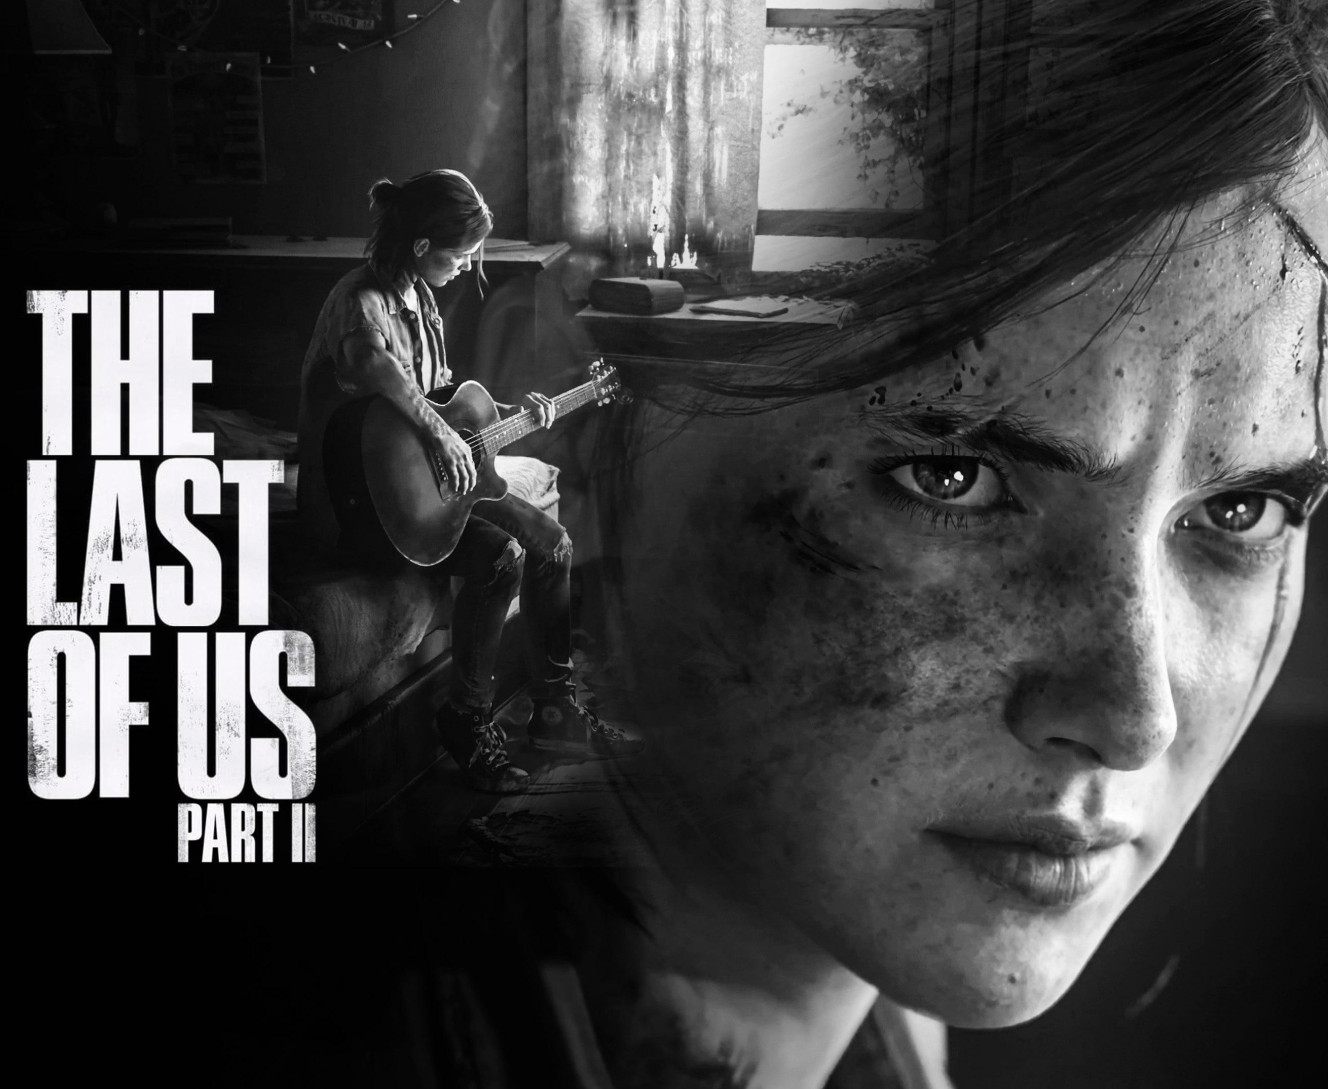 The Last of Us art New